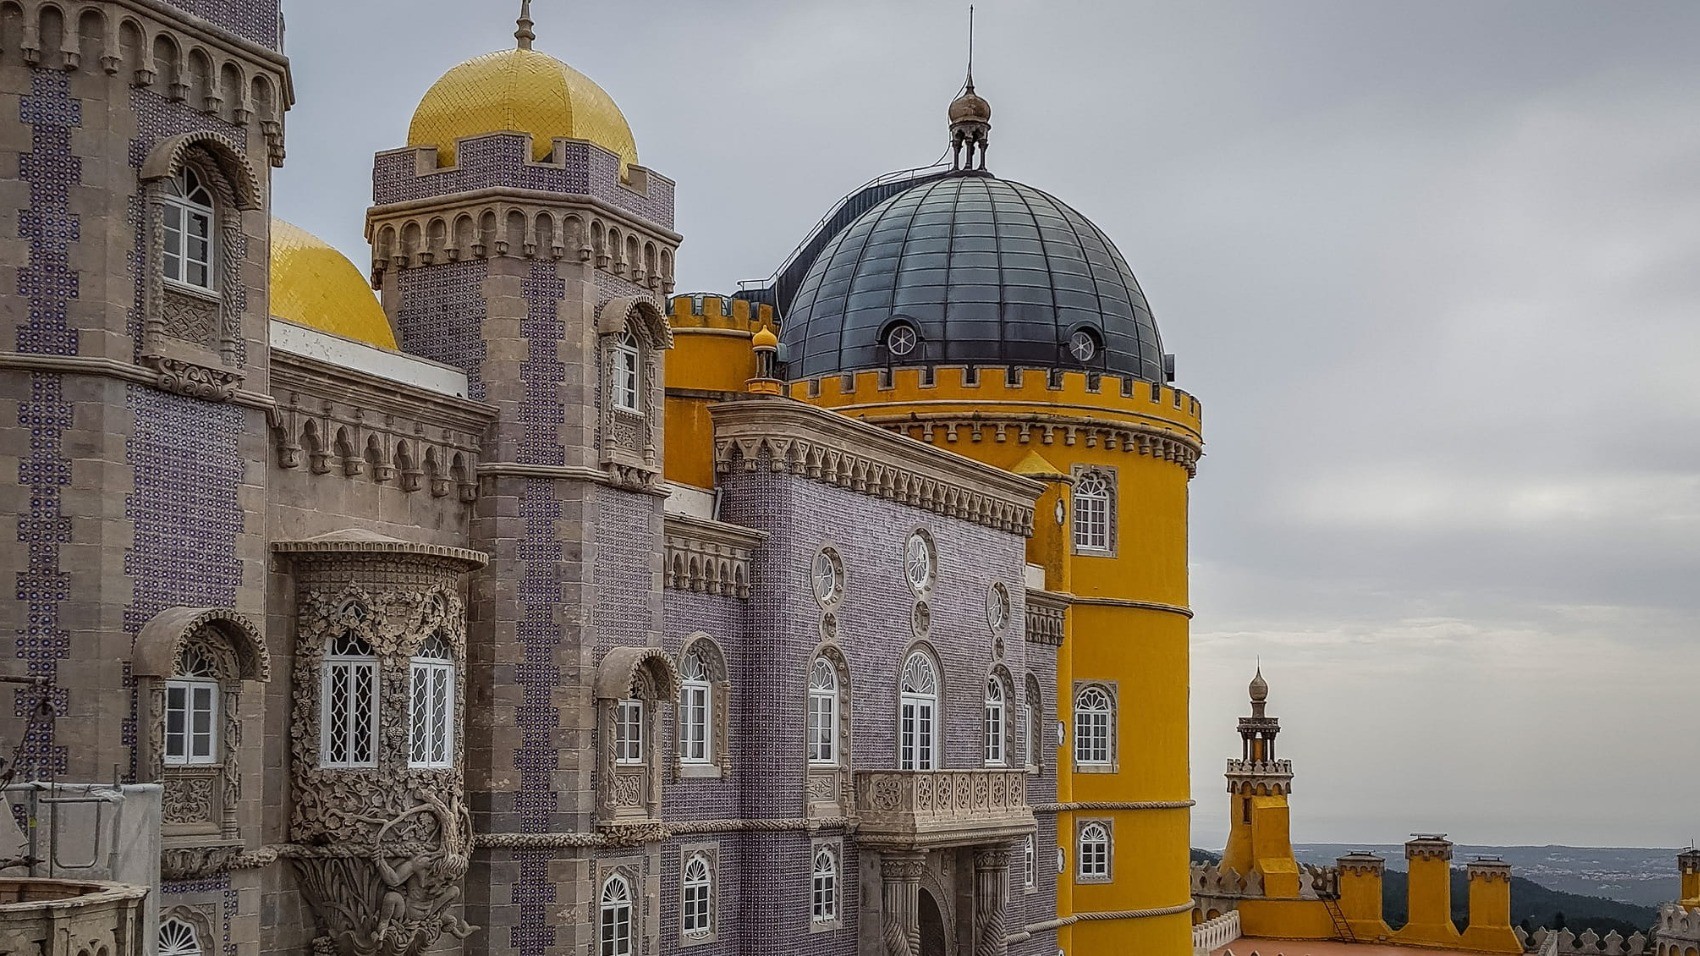 Lisbon-&-Surroundings-with-Alentejo-World-Heritage-pena-palace